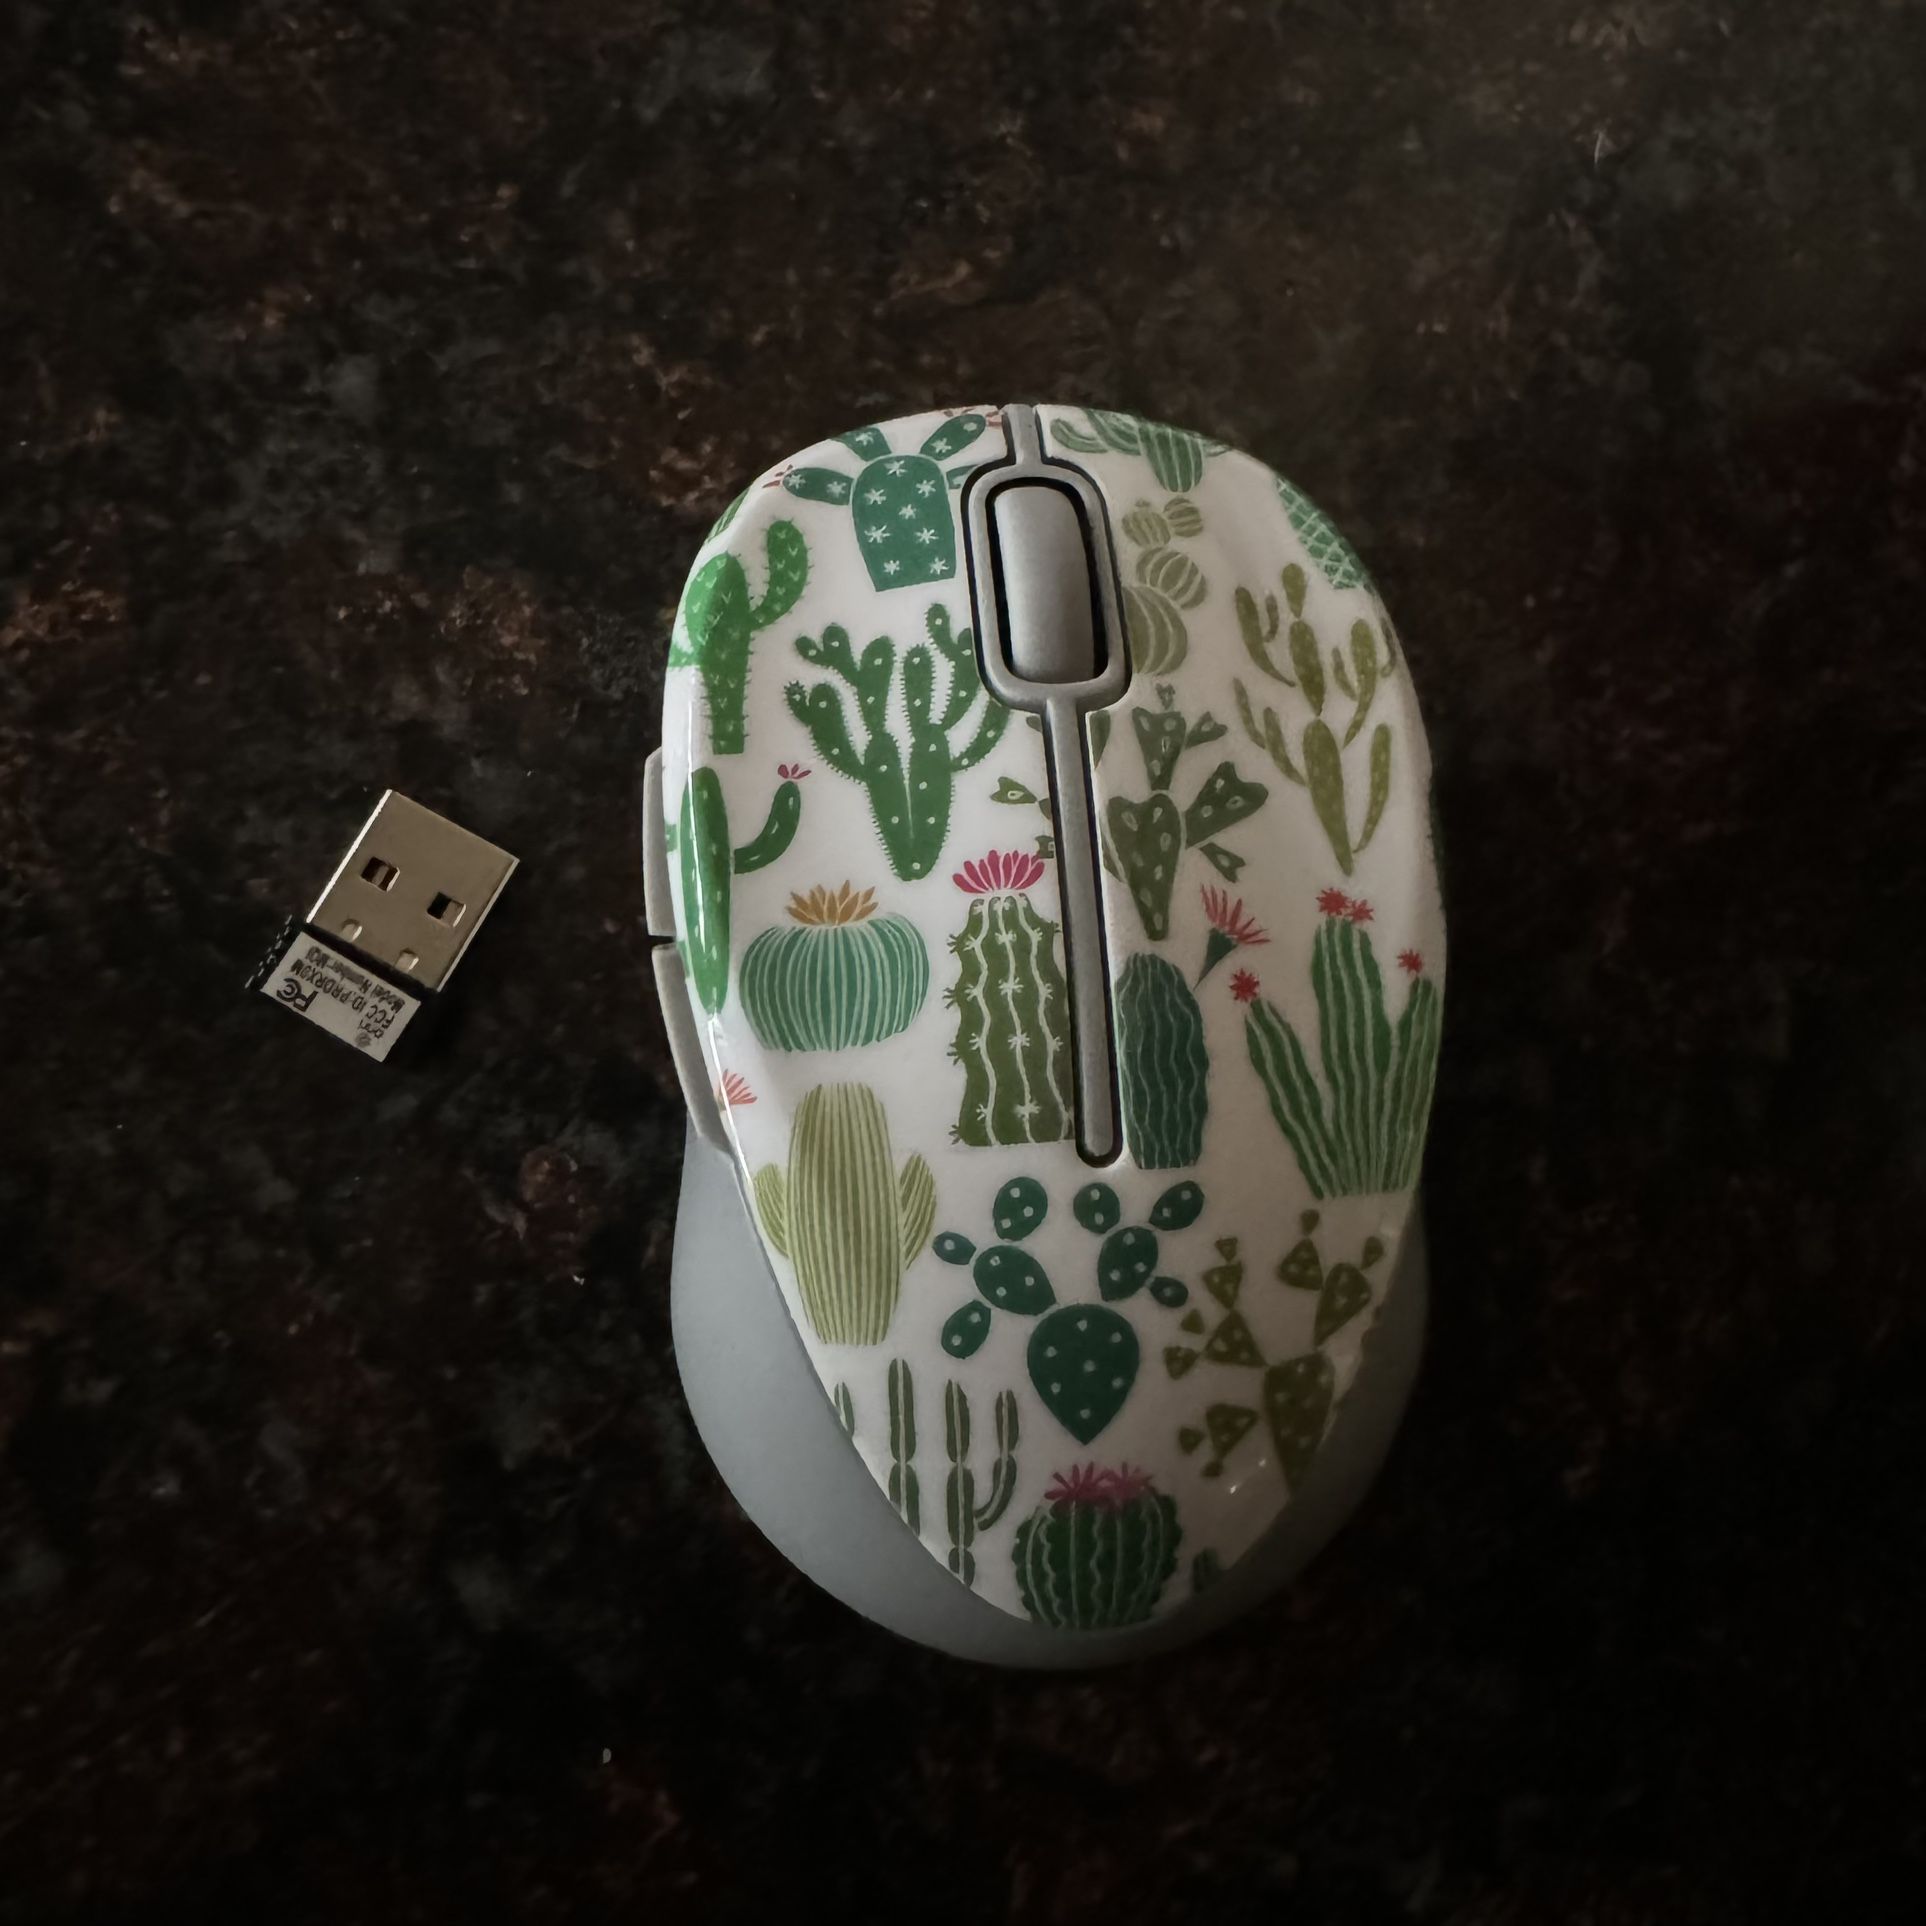 Onn Wireless mouse